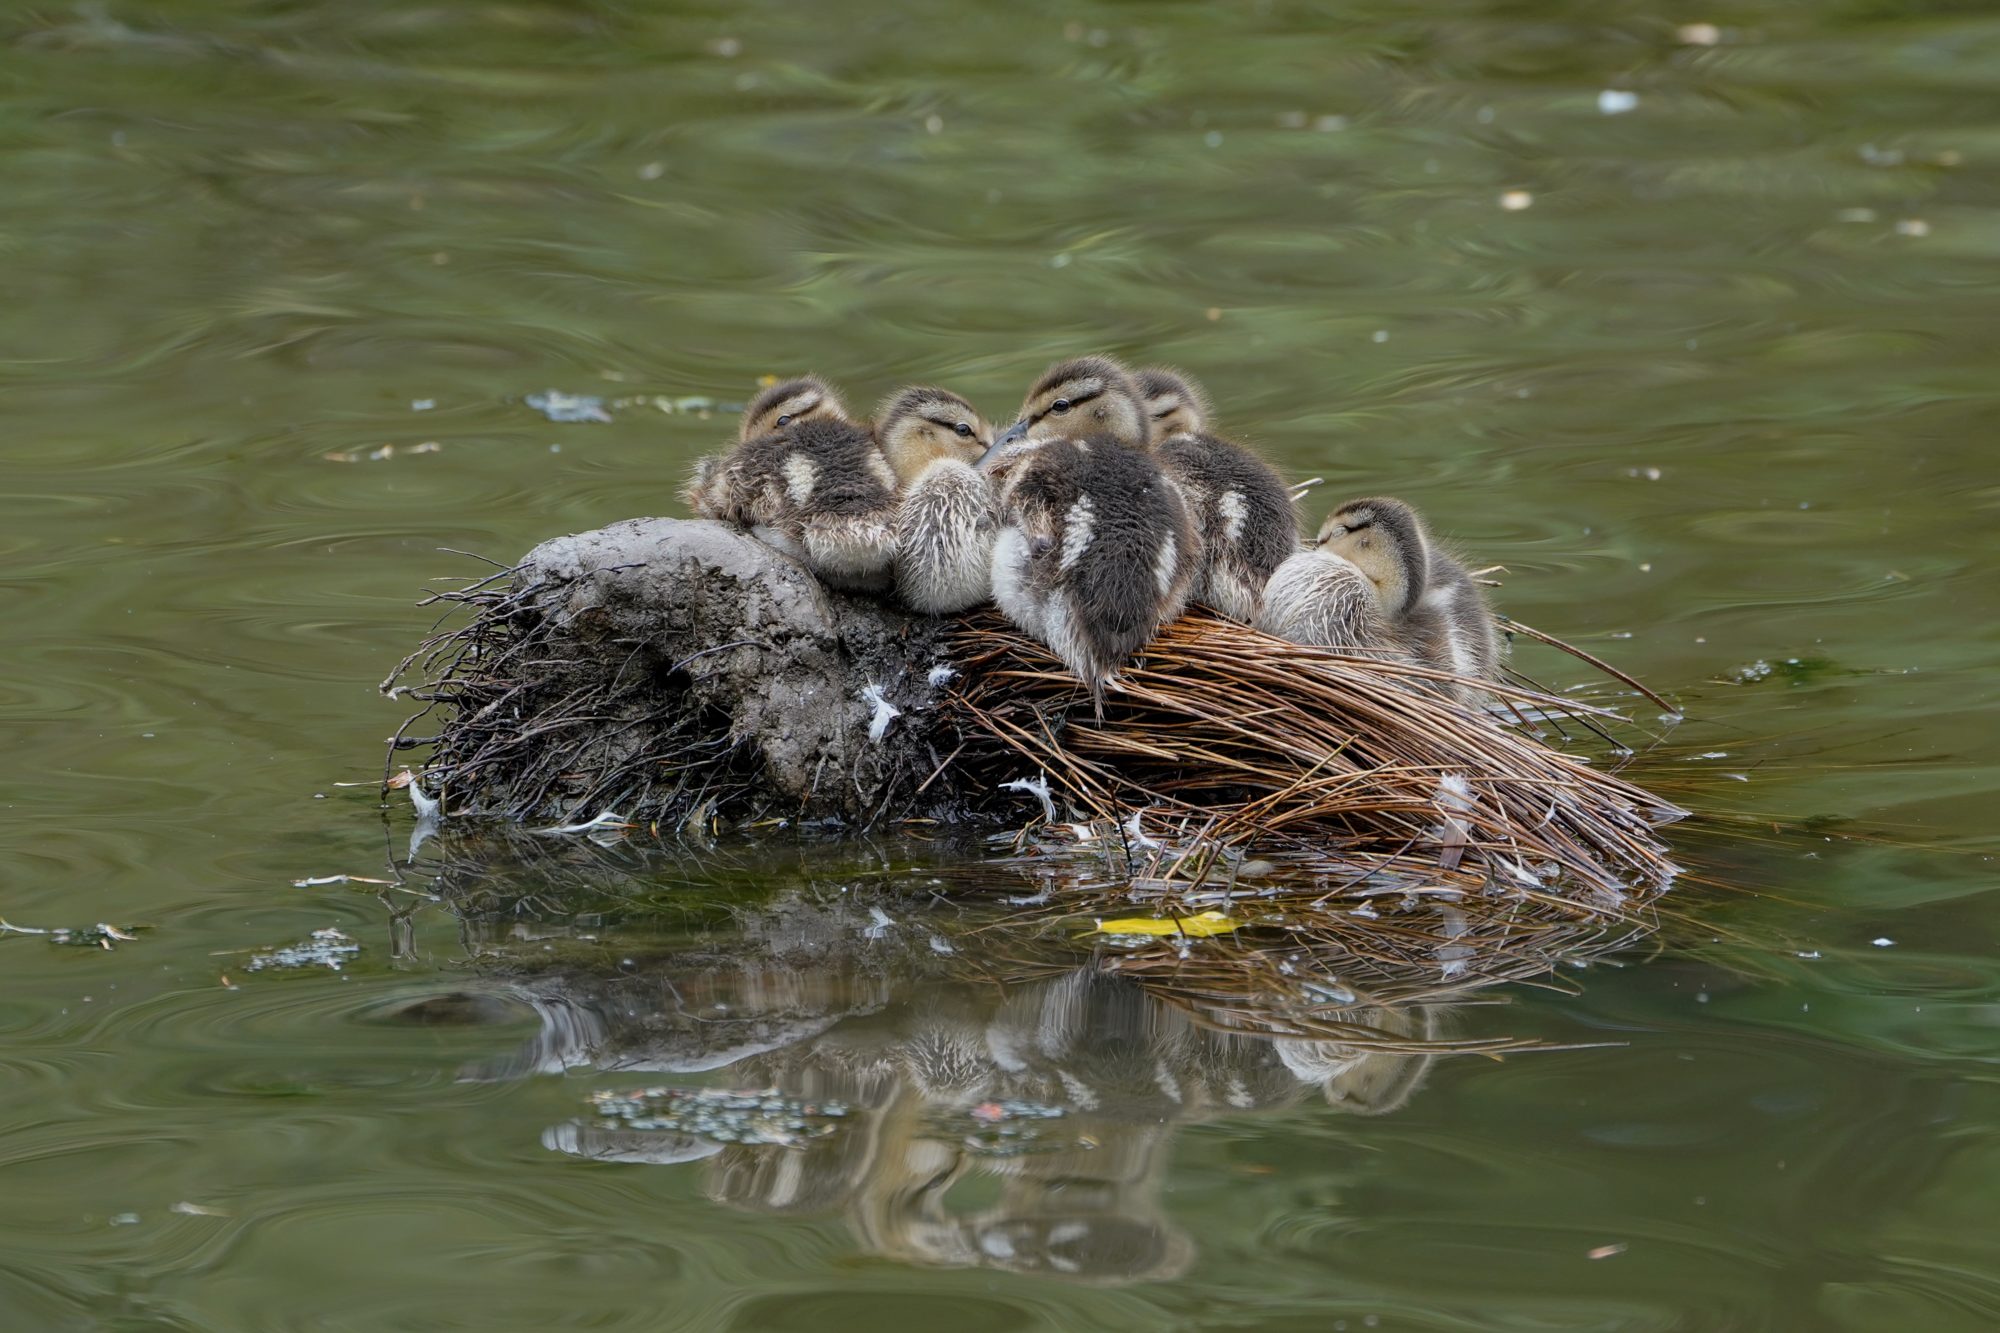 A half dozen or so Mallard ducklings huddling on a tiny island barely bigger than their group